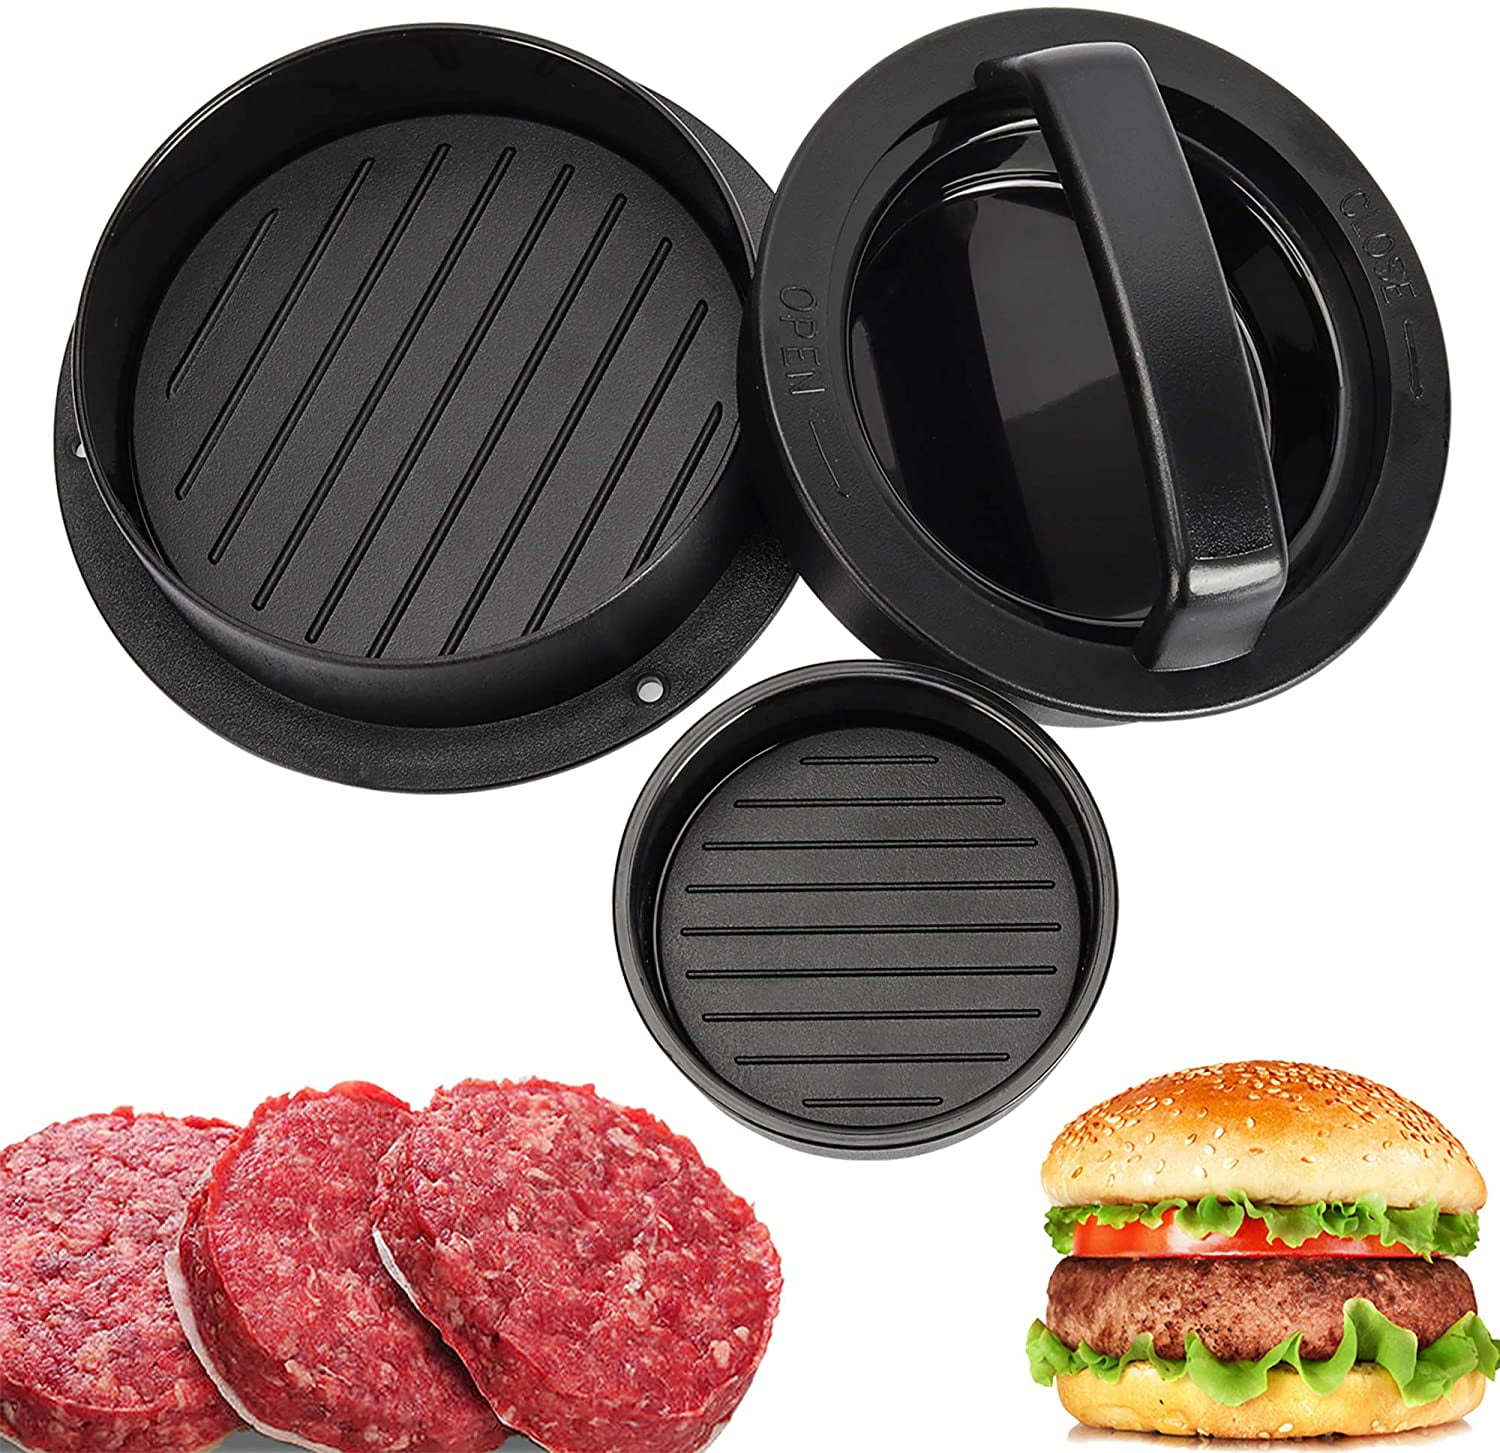 Regular Beef Burgers Aolvo Hamburger Press Maker for Stuffed Burgers Sliders Burger Press Kit